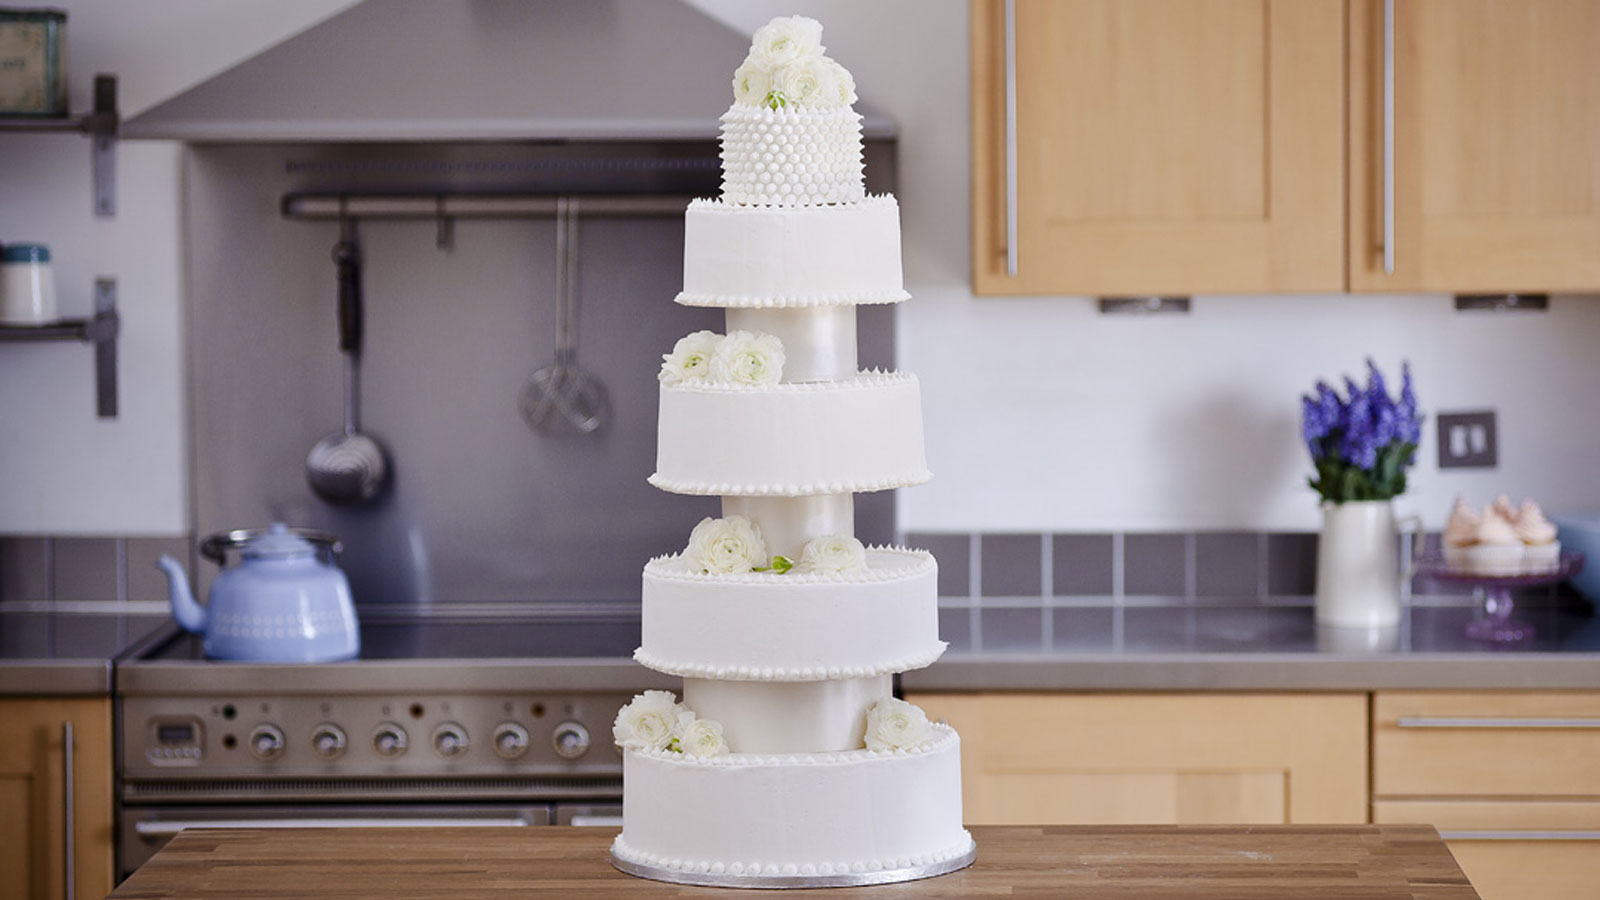 Extravagant five-tiered wedding cake recipe - BBC Food